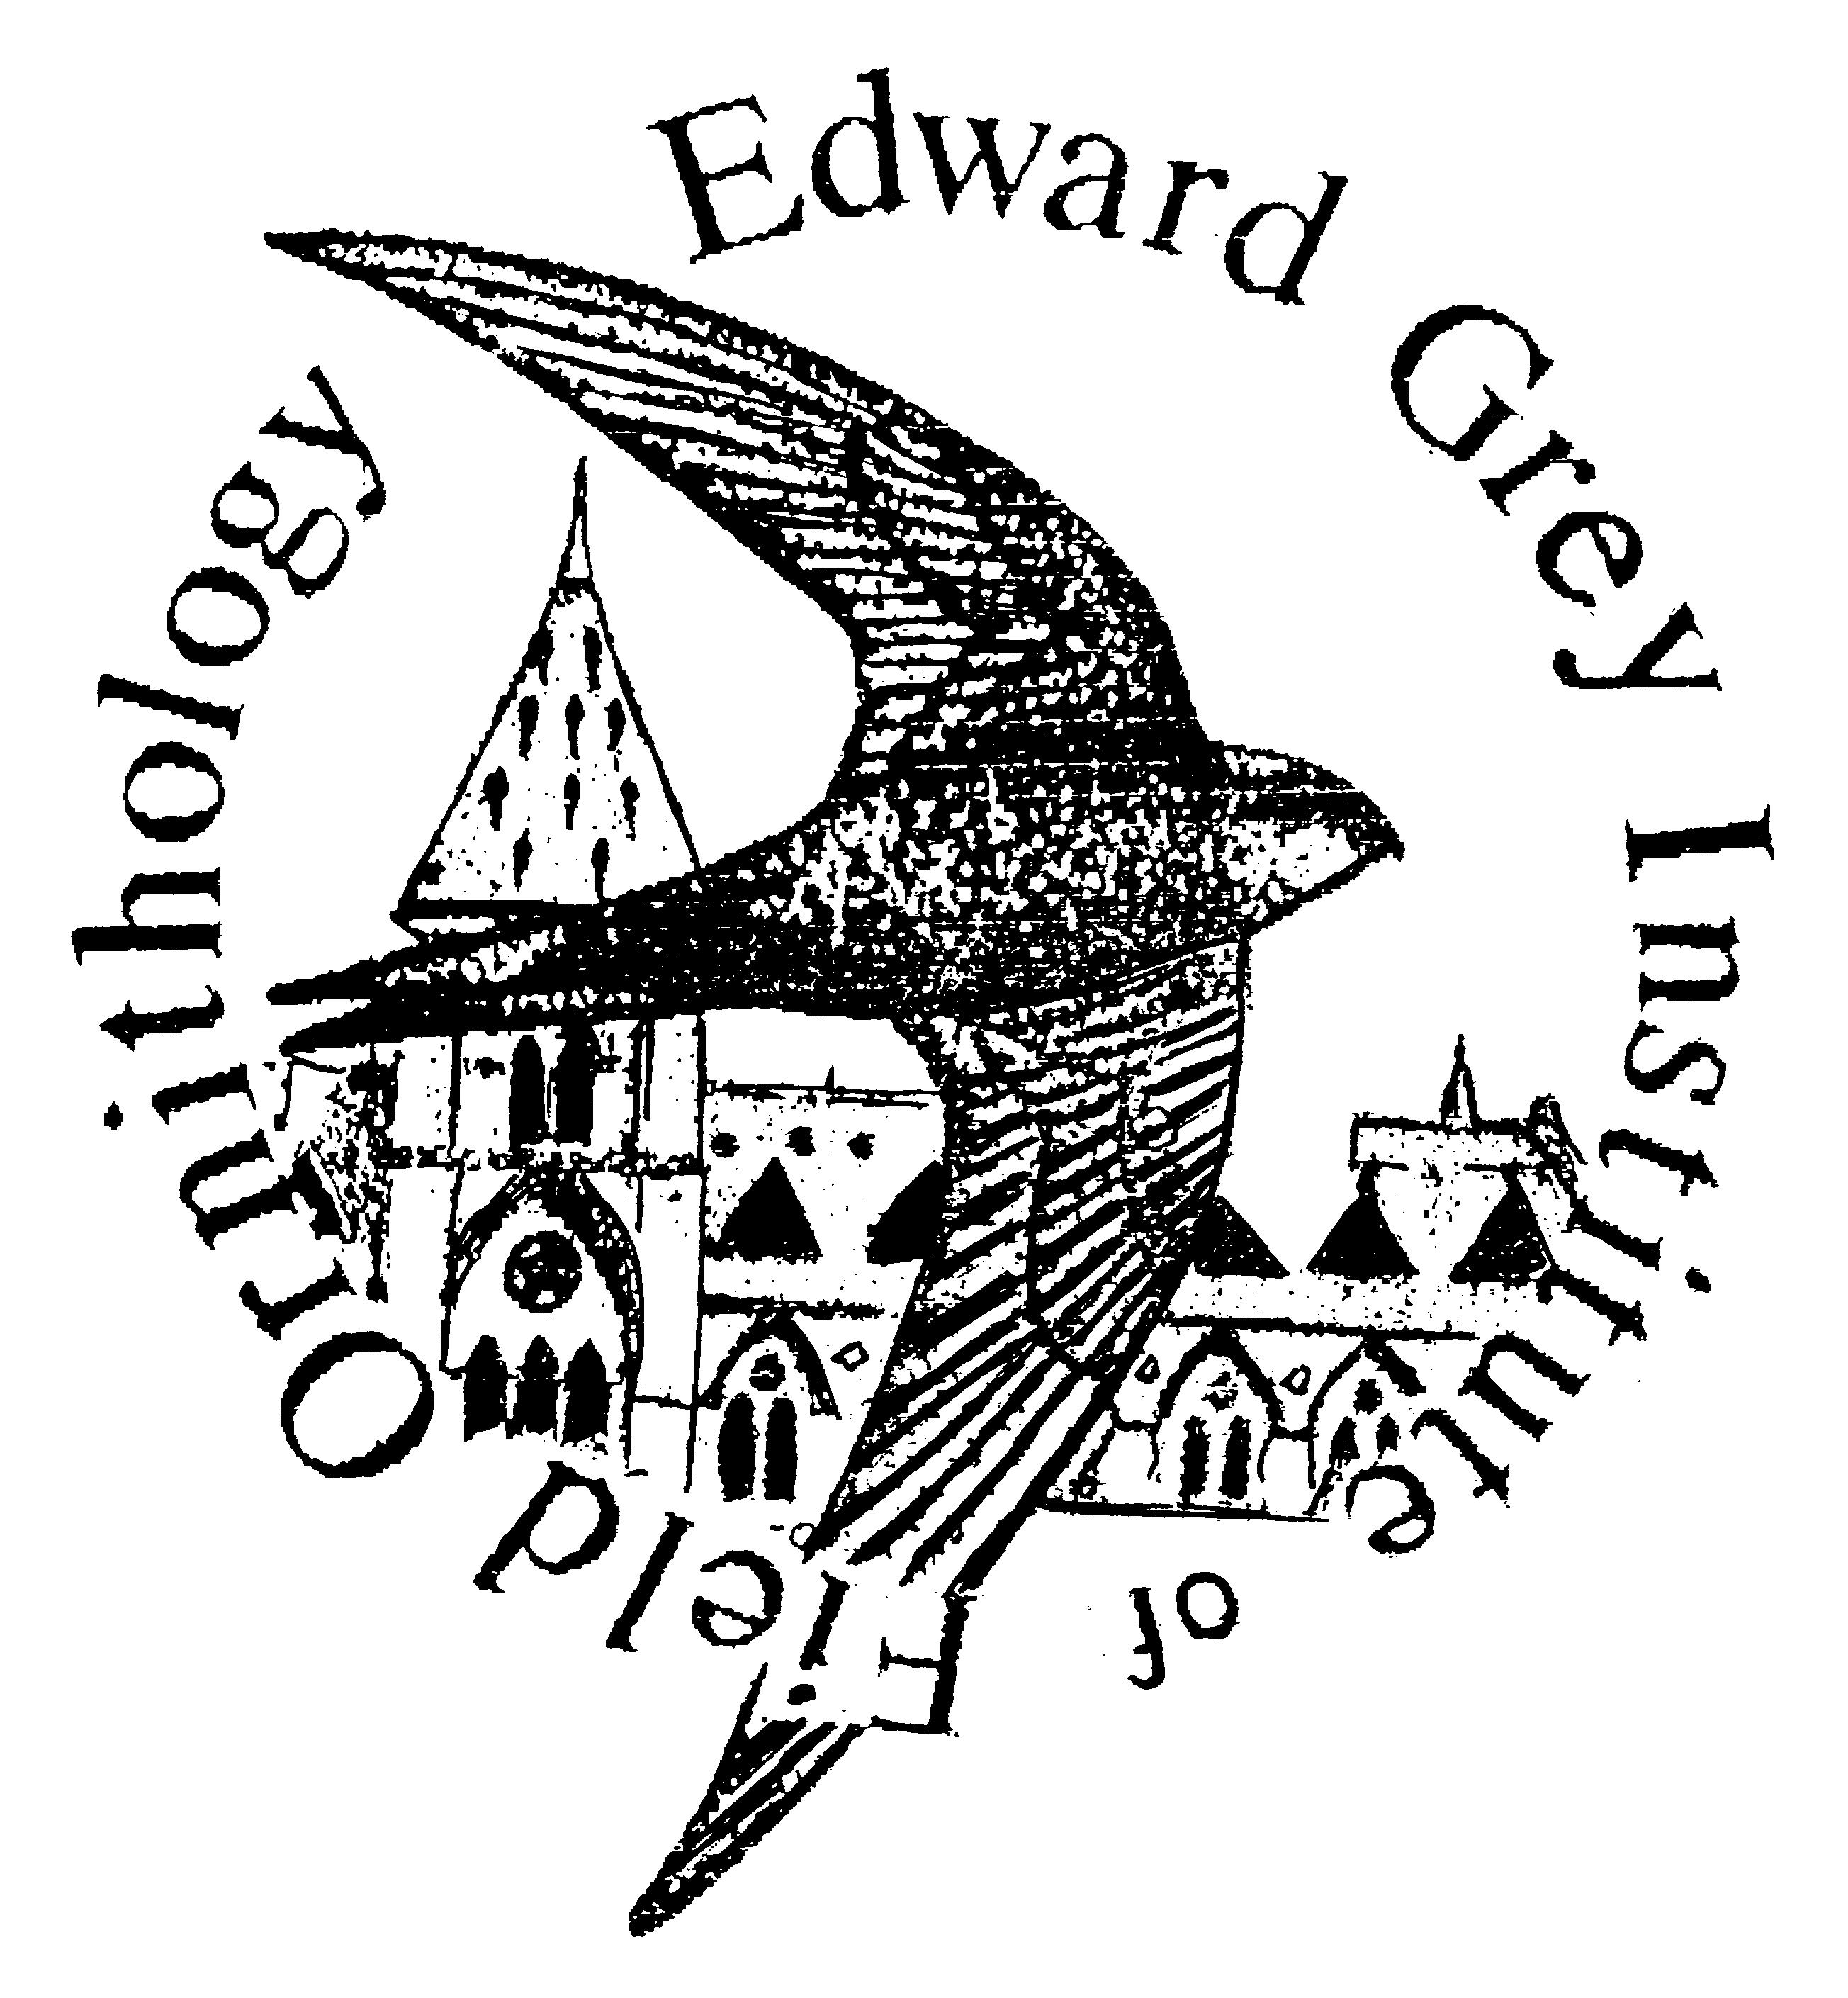 Edward Greyb Institute logo